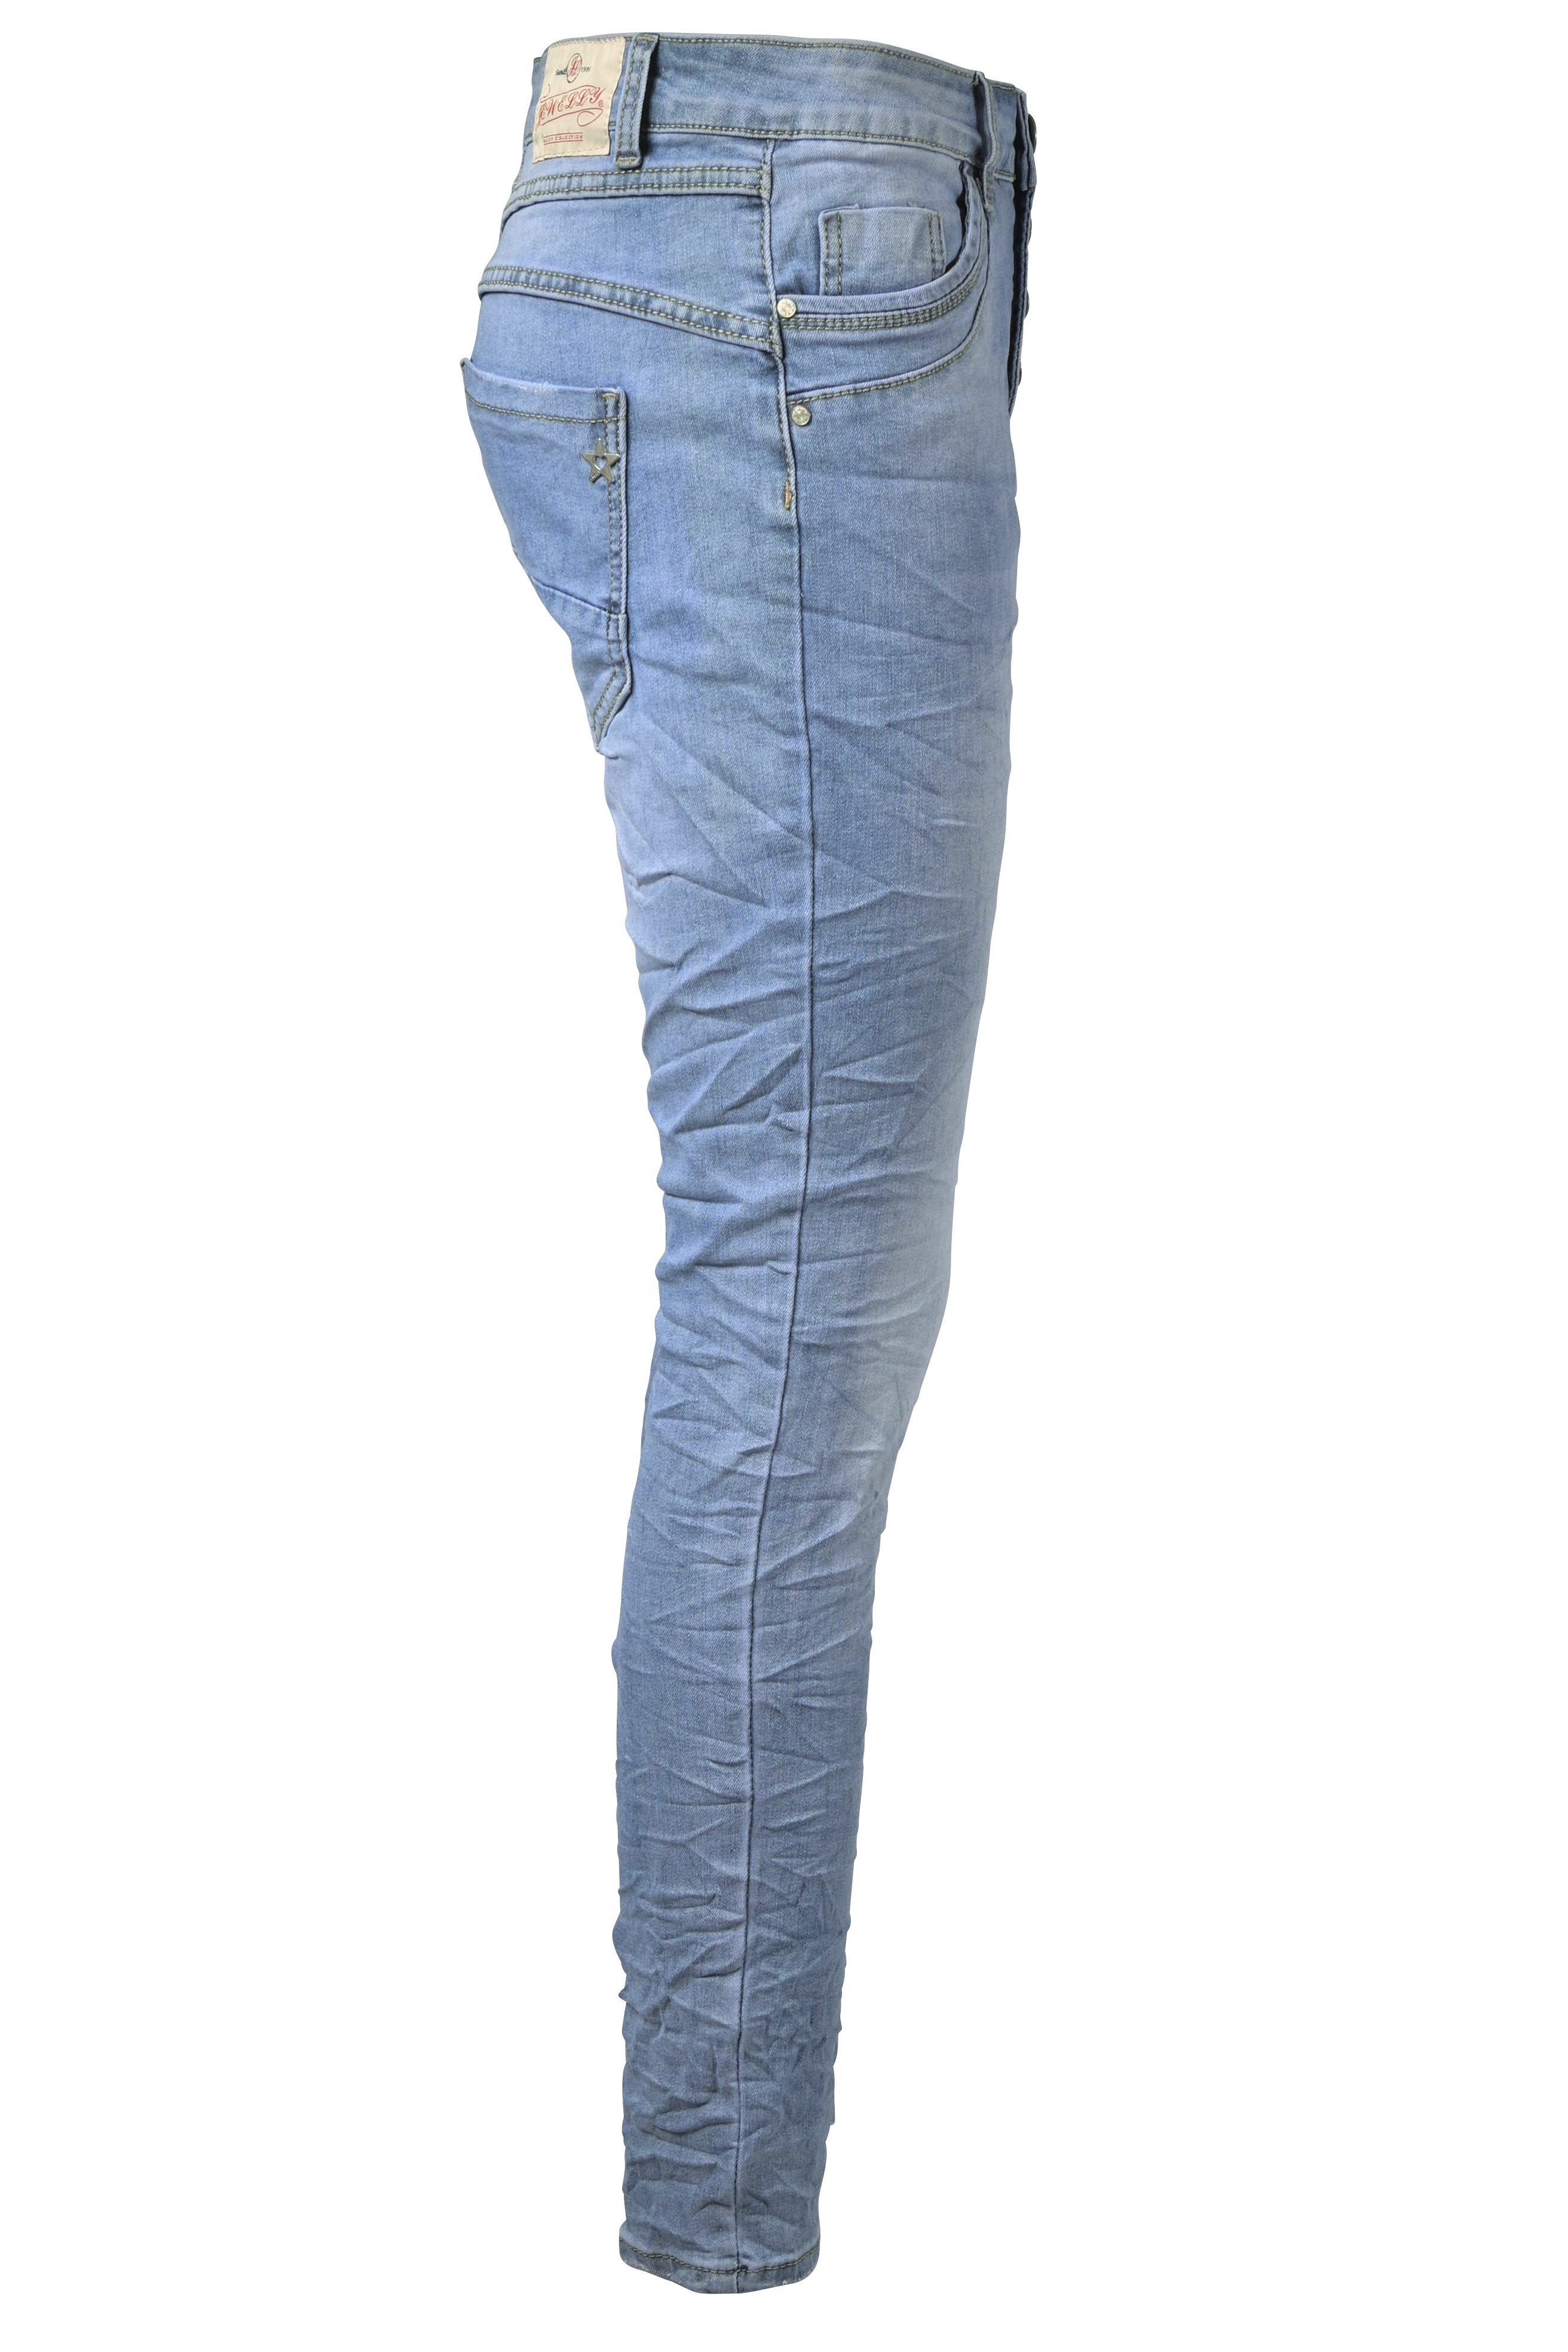 Jewelly Jeans Stretch im Five-Pocket Regular-fit-Jeans Crash-Look